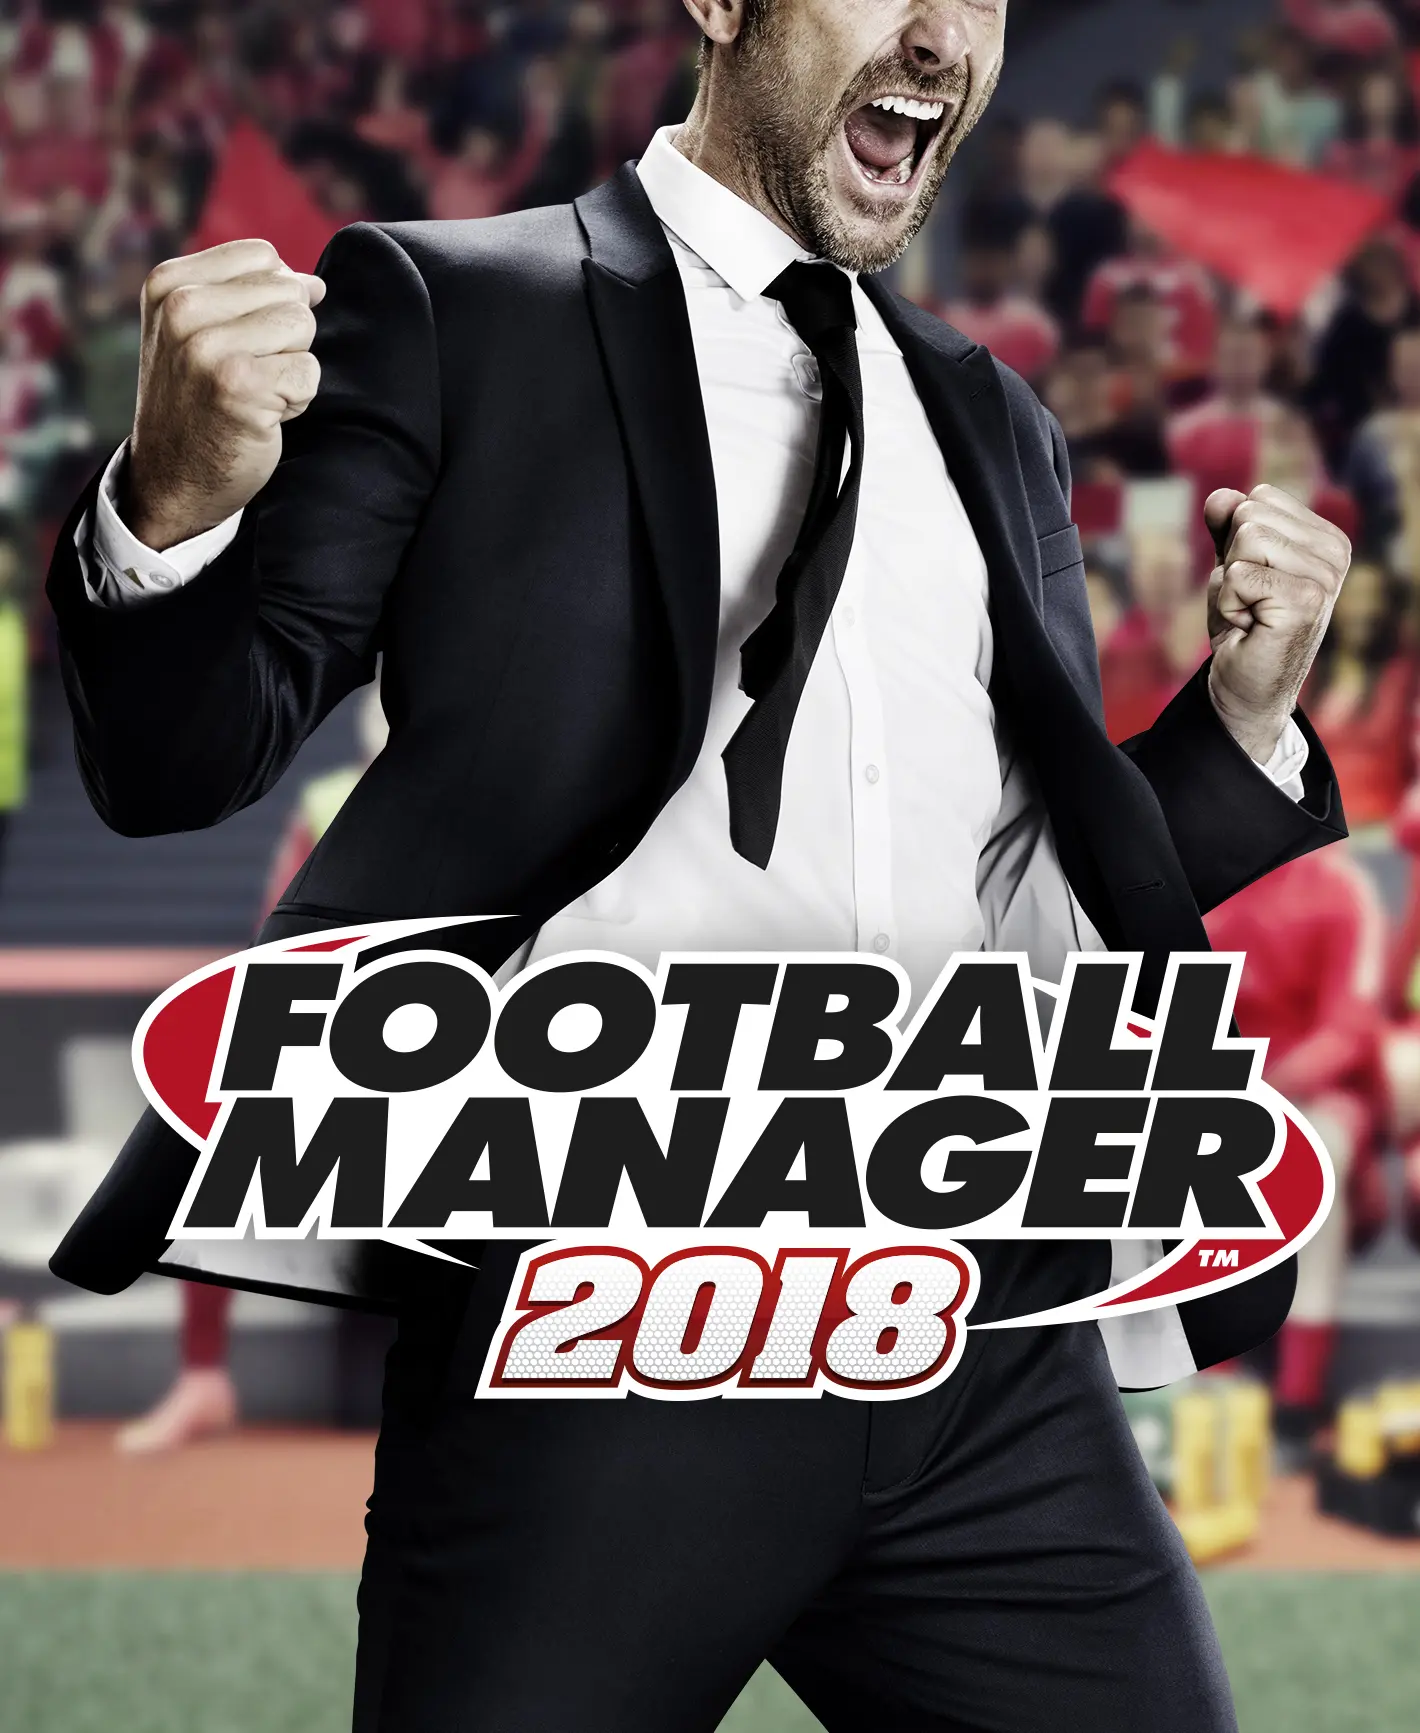 Football Manager 2018 (EU) (PC / Mac / Linux) - Steam - Digital Code